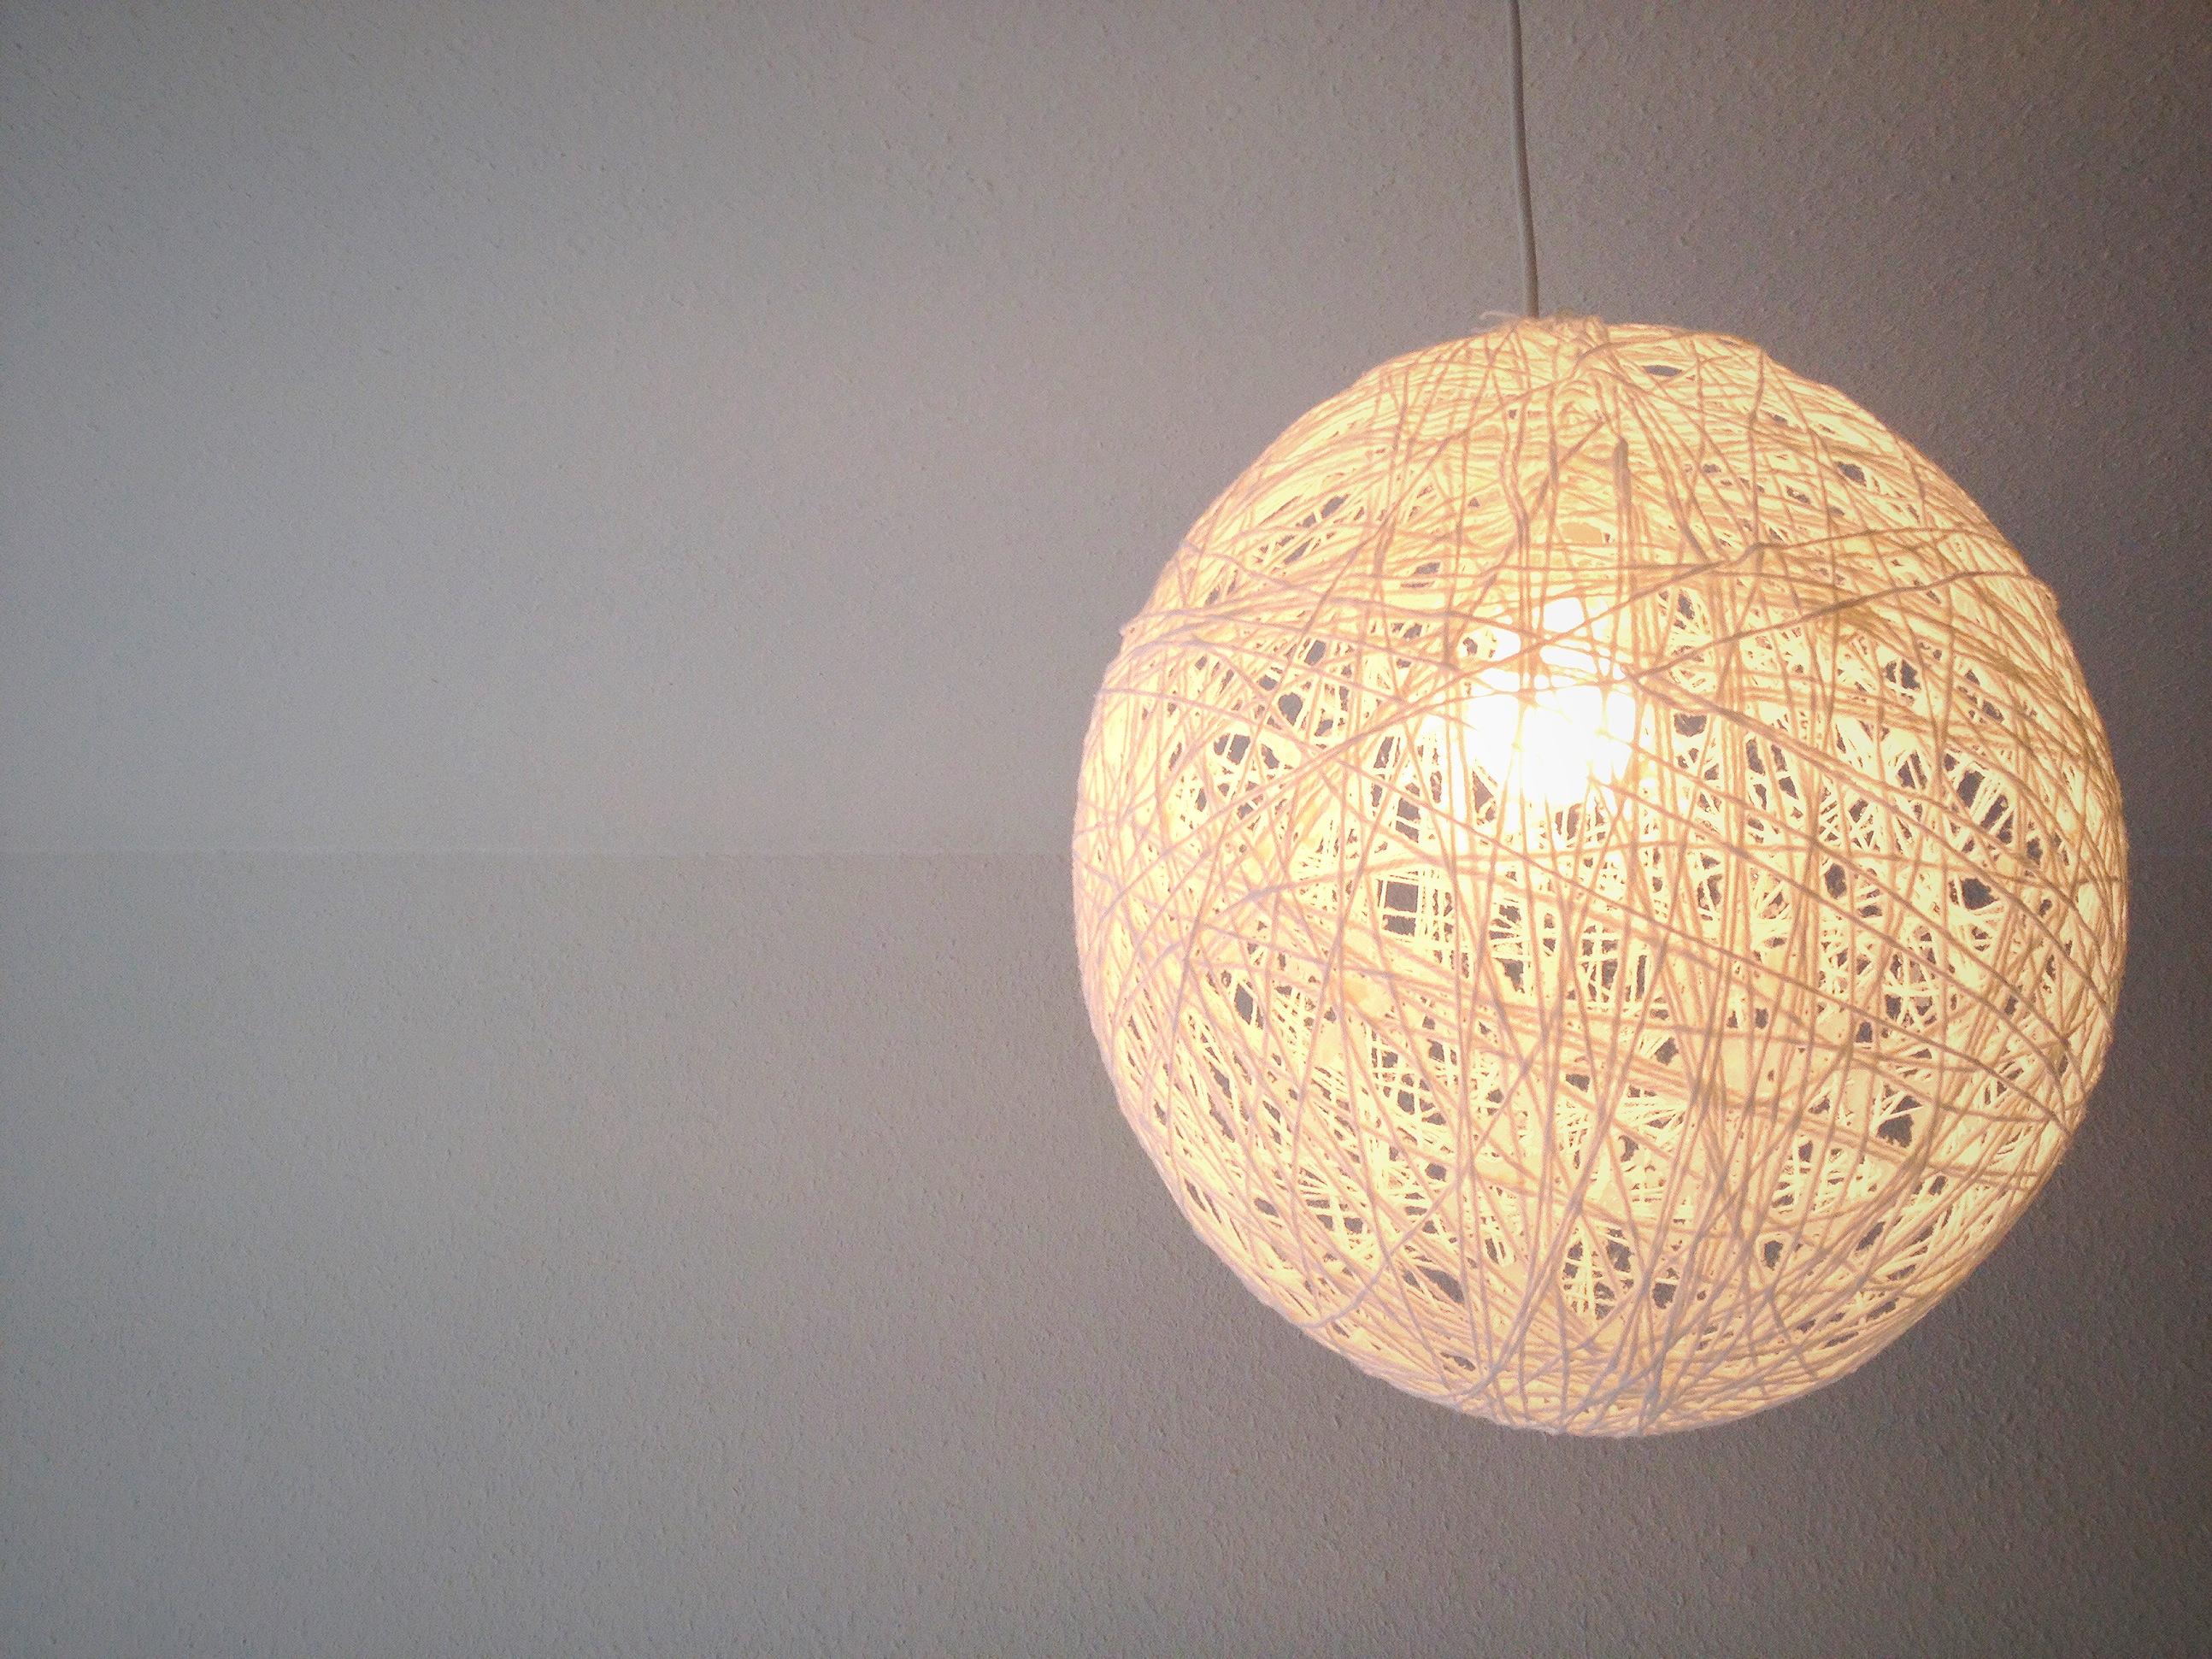 Lampe aus Wolle #bastelidee #diy #lampe #diylampe ©Hannah Lühr-Tanck